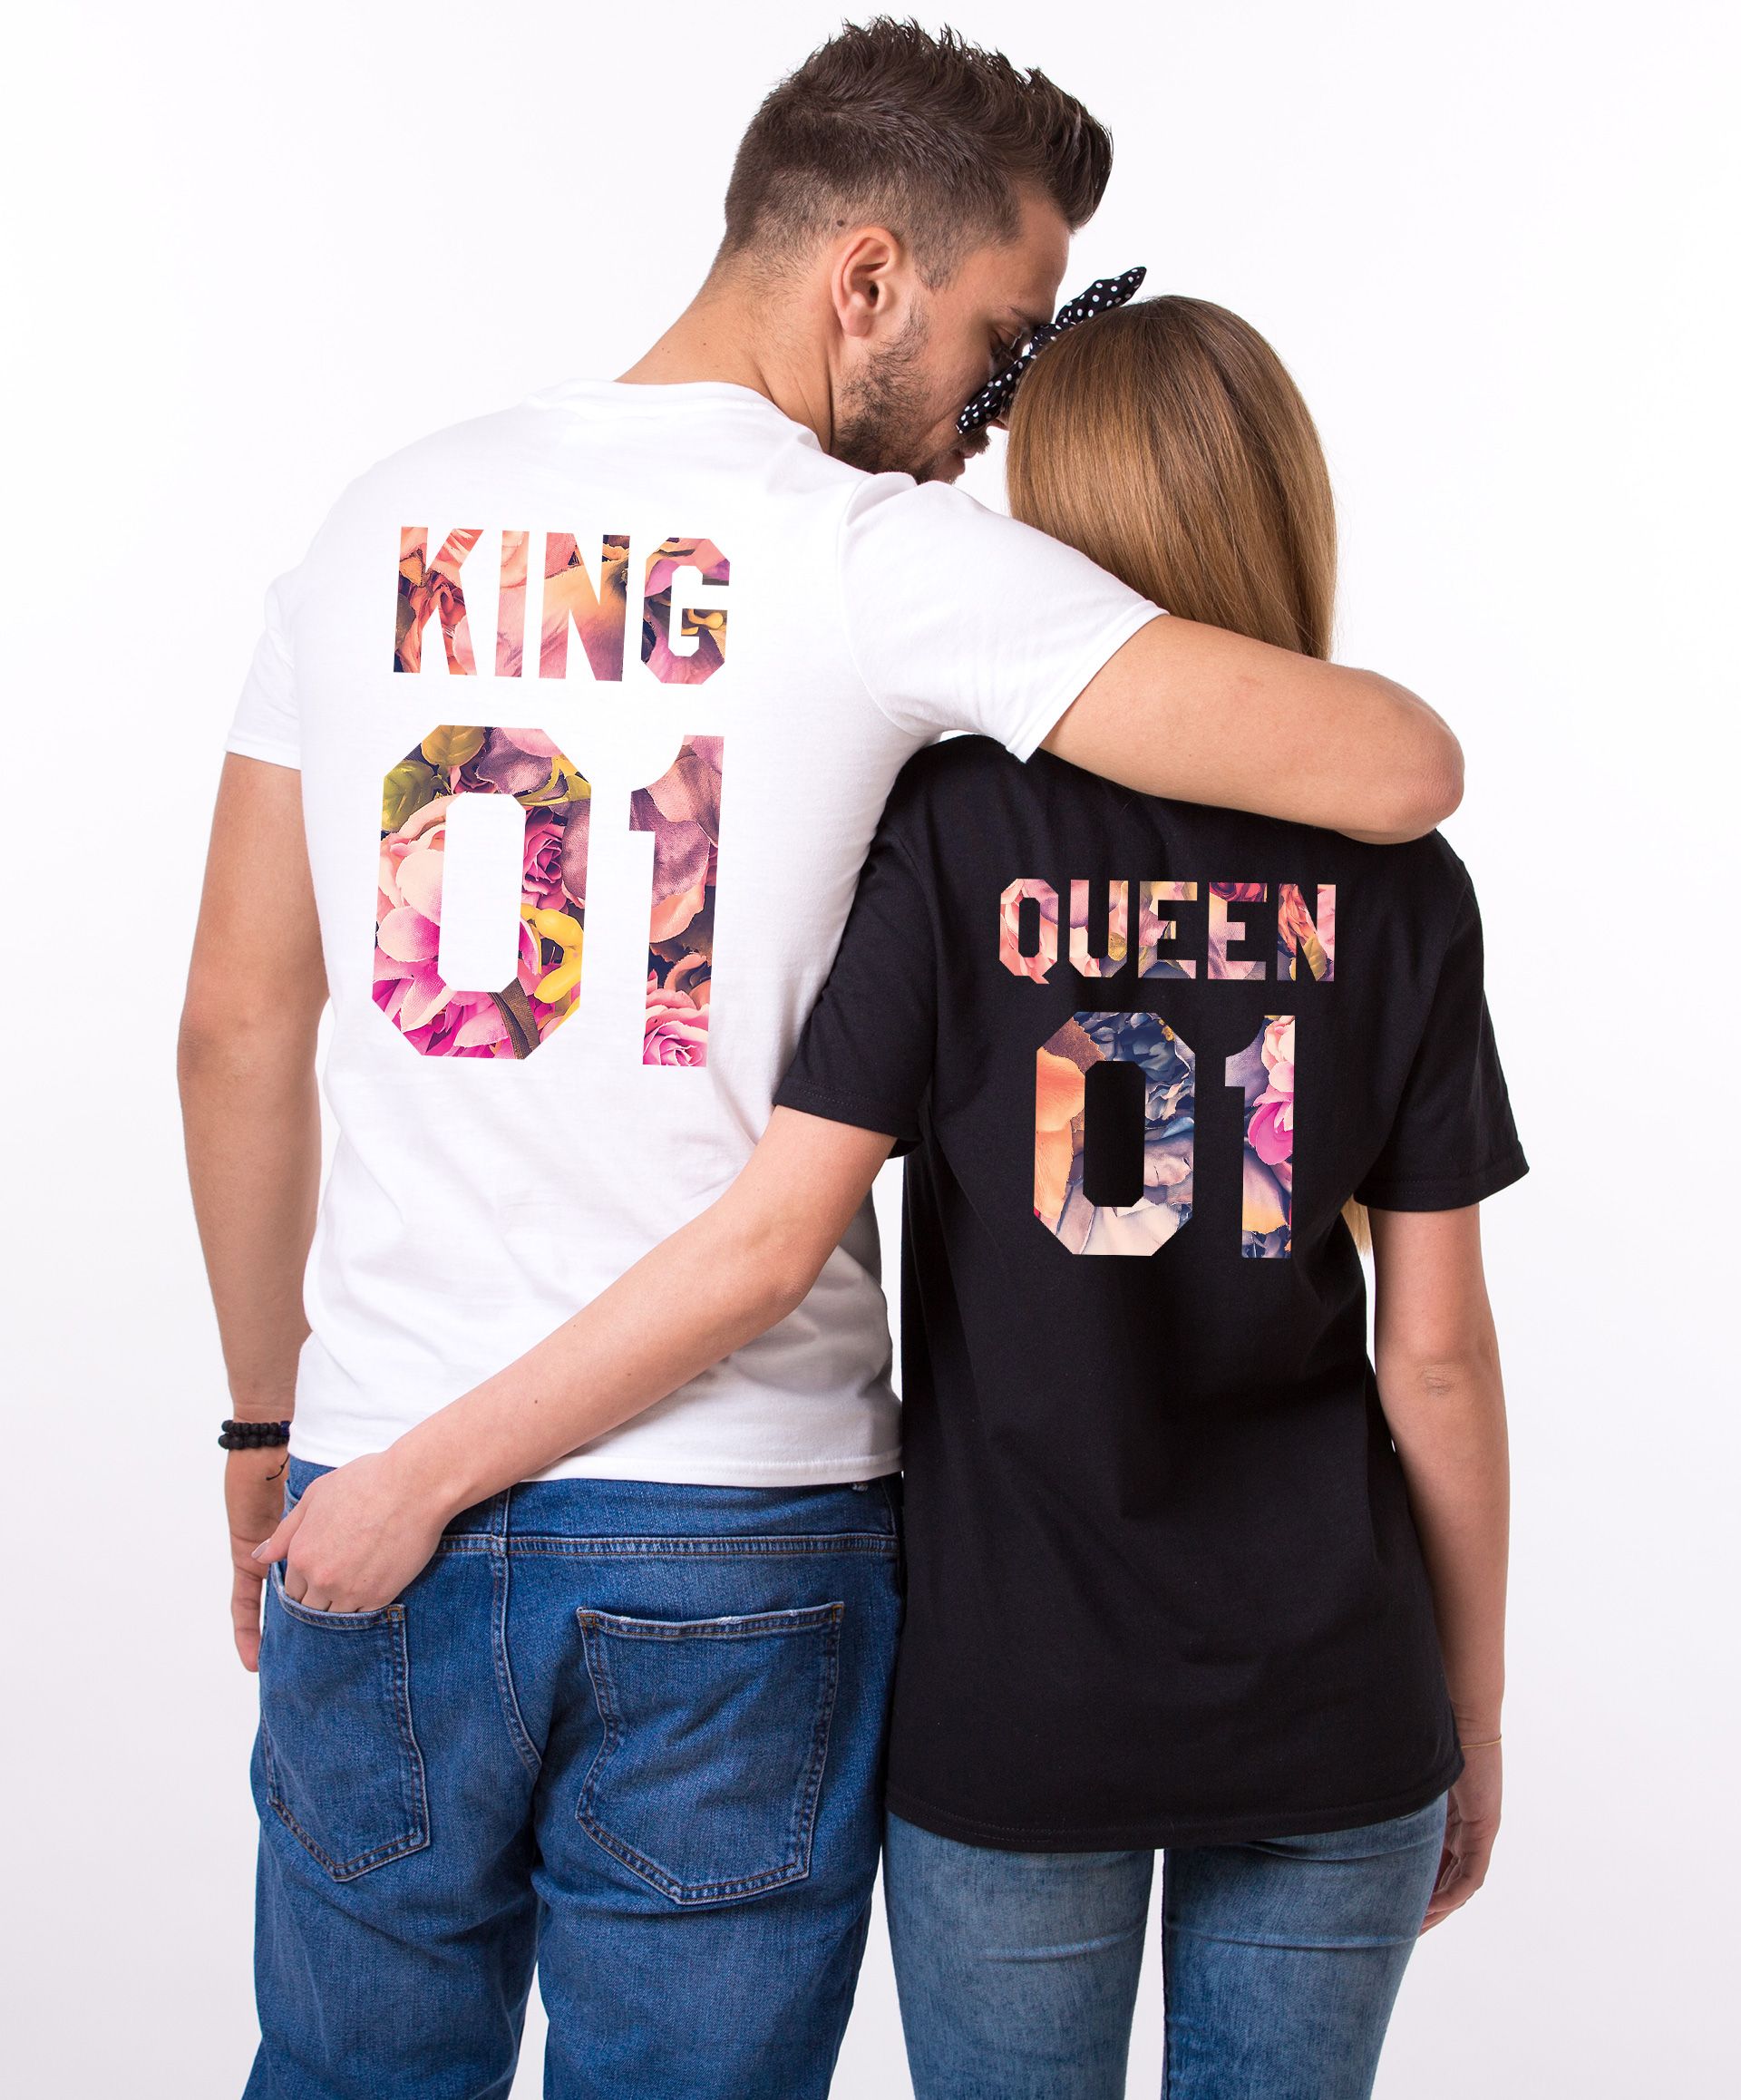 Topnicegifts Royal King & Queen Shirts - Topnicegifts, Couples Stuff